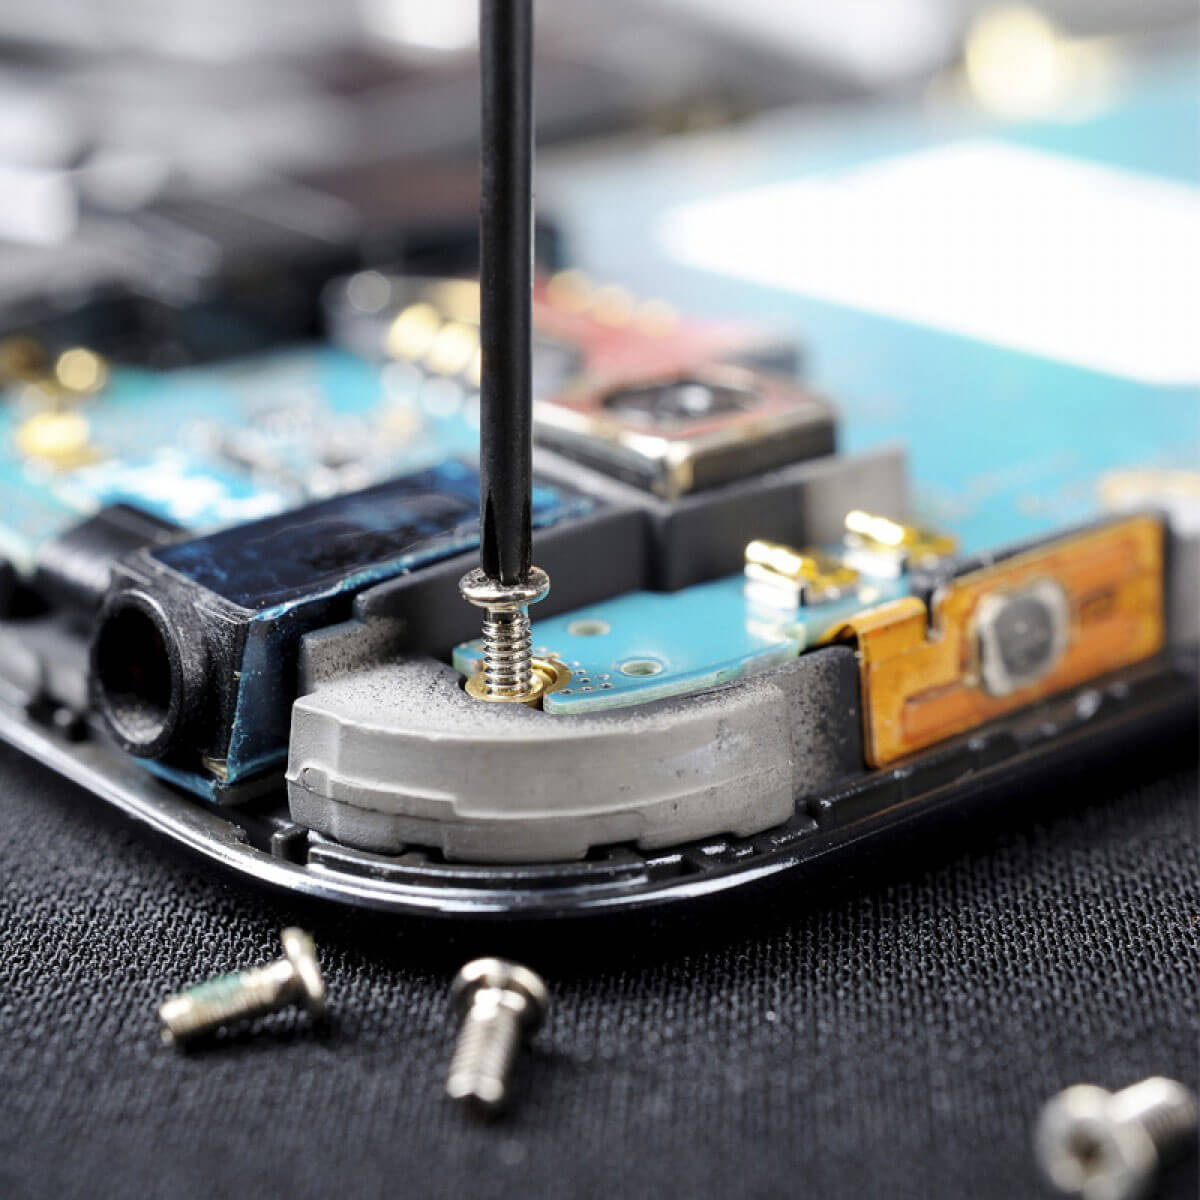 Repairing a cellphone